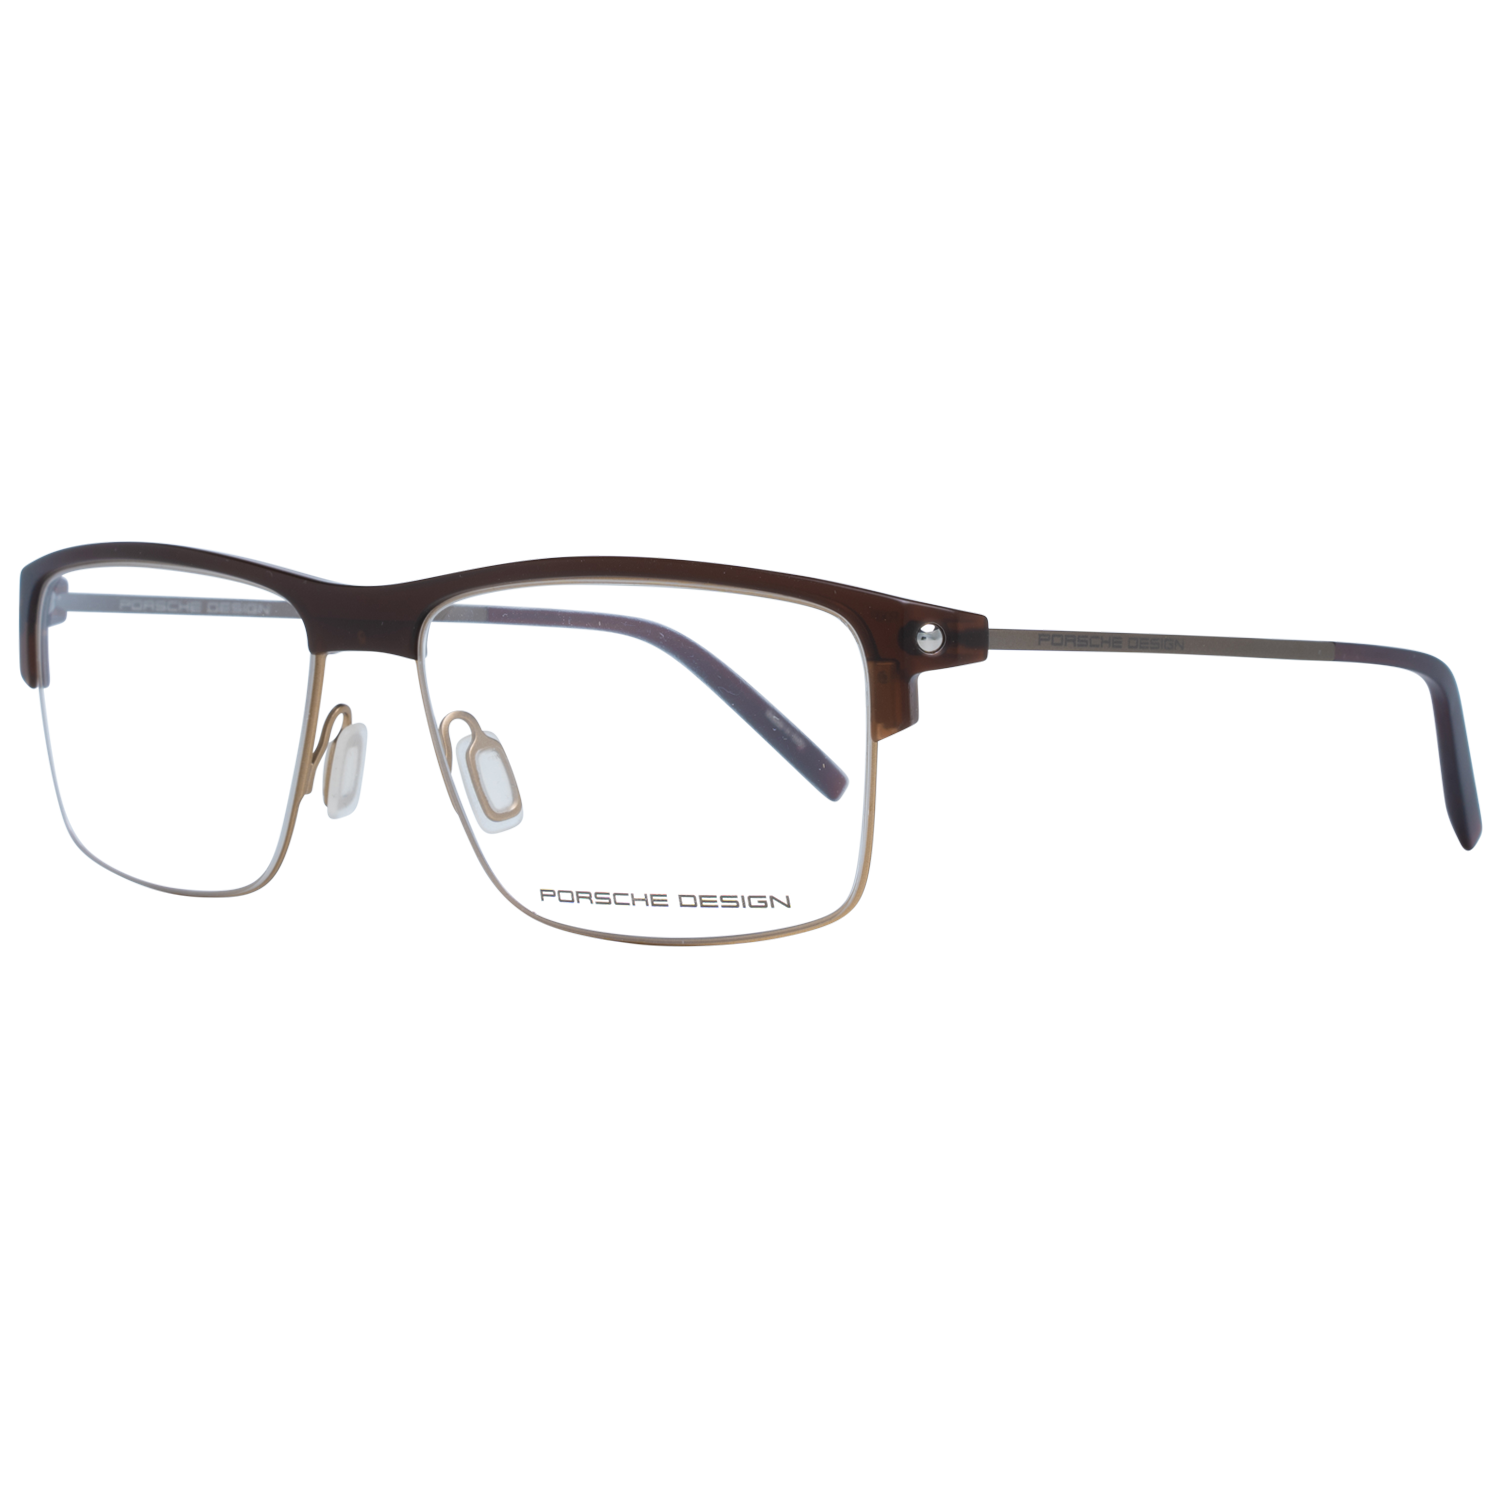 Porsche Design Eyeglasses Porsche Design Glasses Frames P8361 B 55mm Eyeglasses Eyewear UK USA Australia 